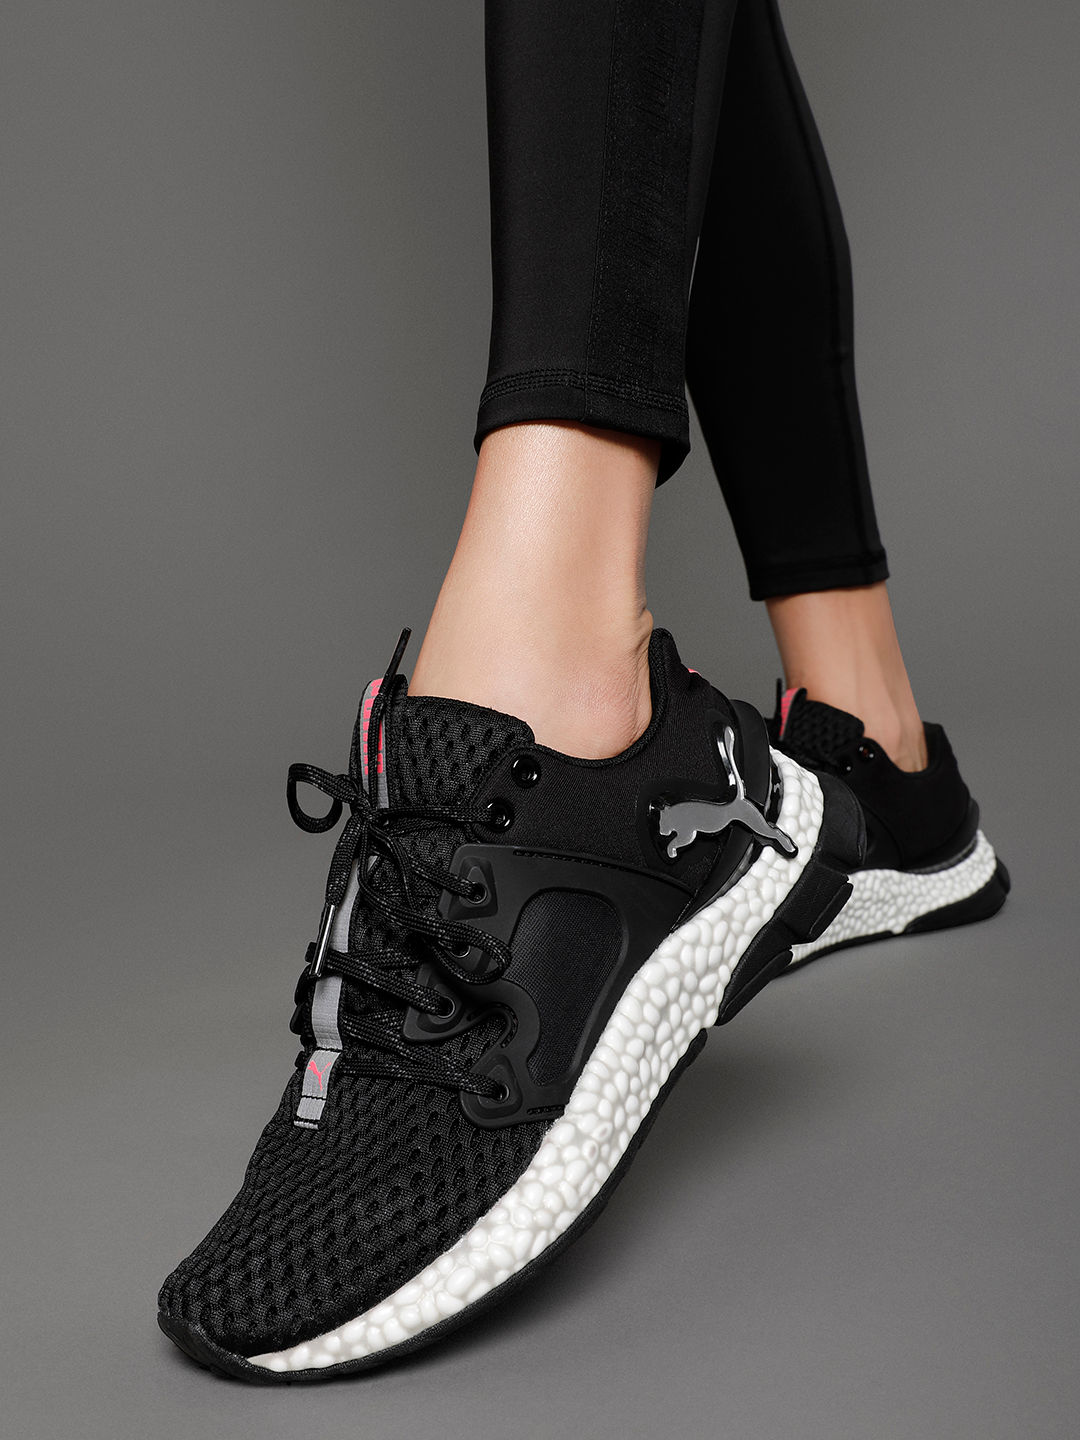 hybrid running shoes womens